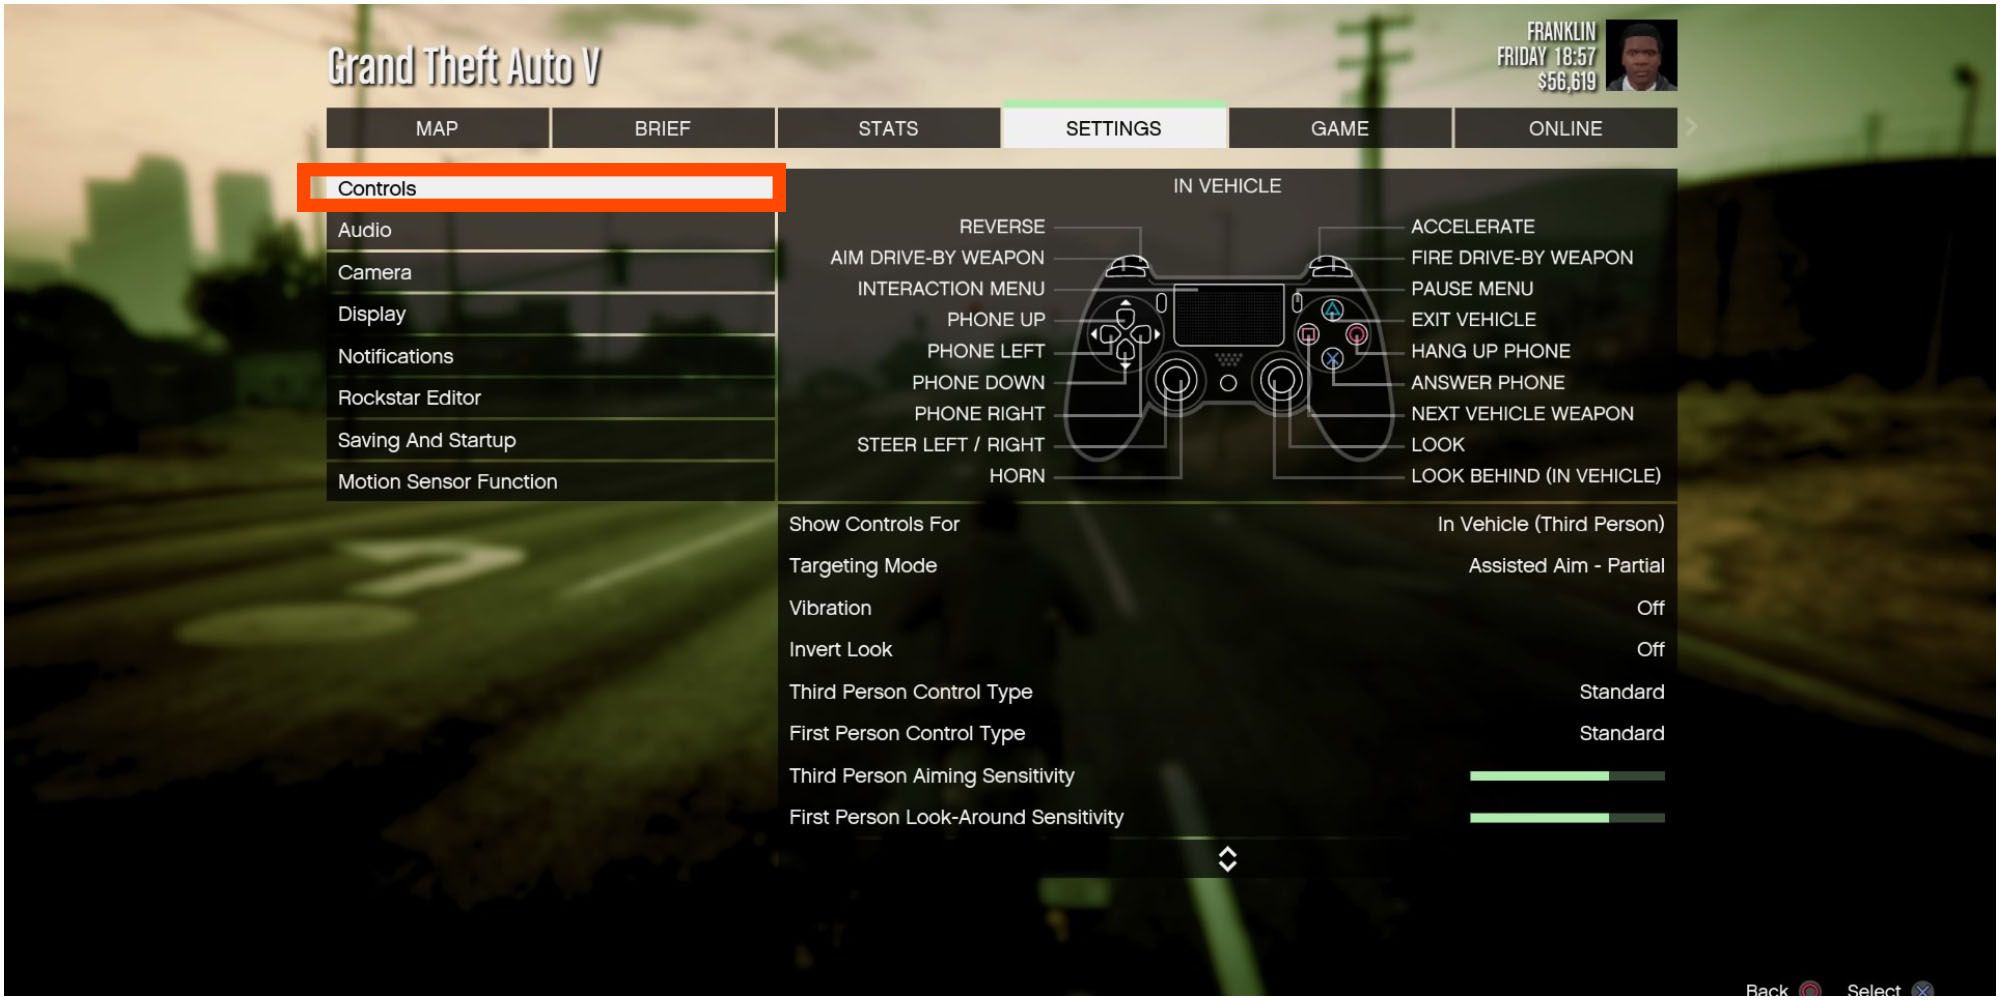 GTA V Controls Settings Highlighted